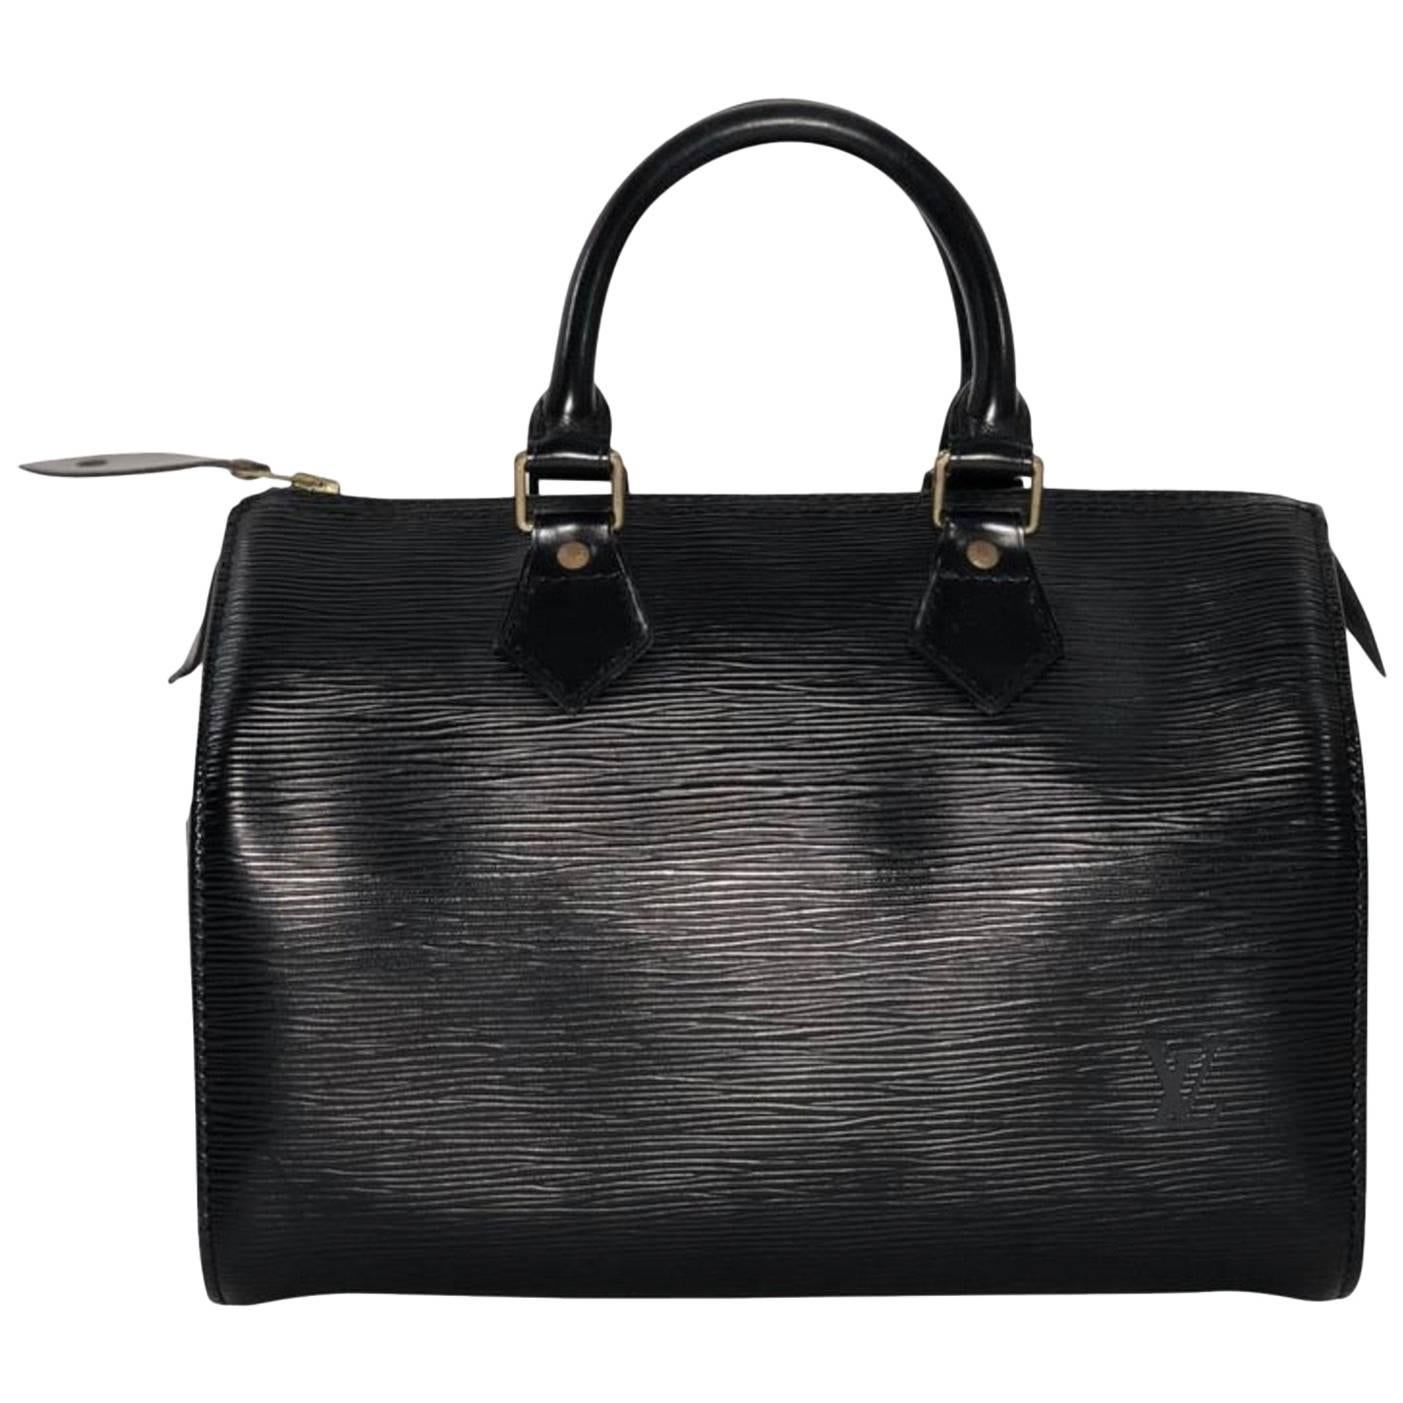 Louis Vuitton Epi Speedy 25 in Black Satchel Handbag